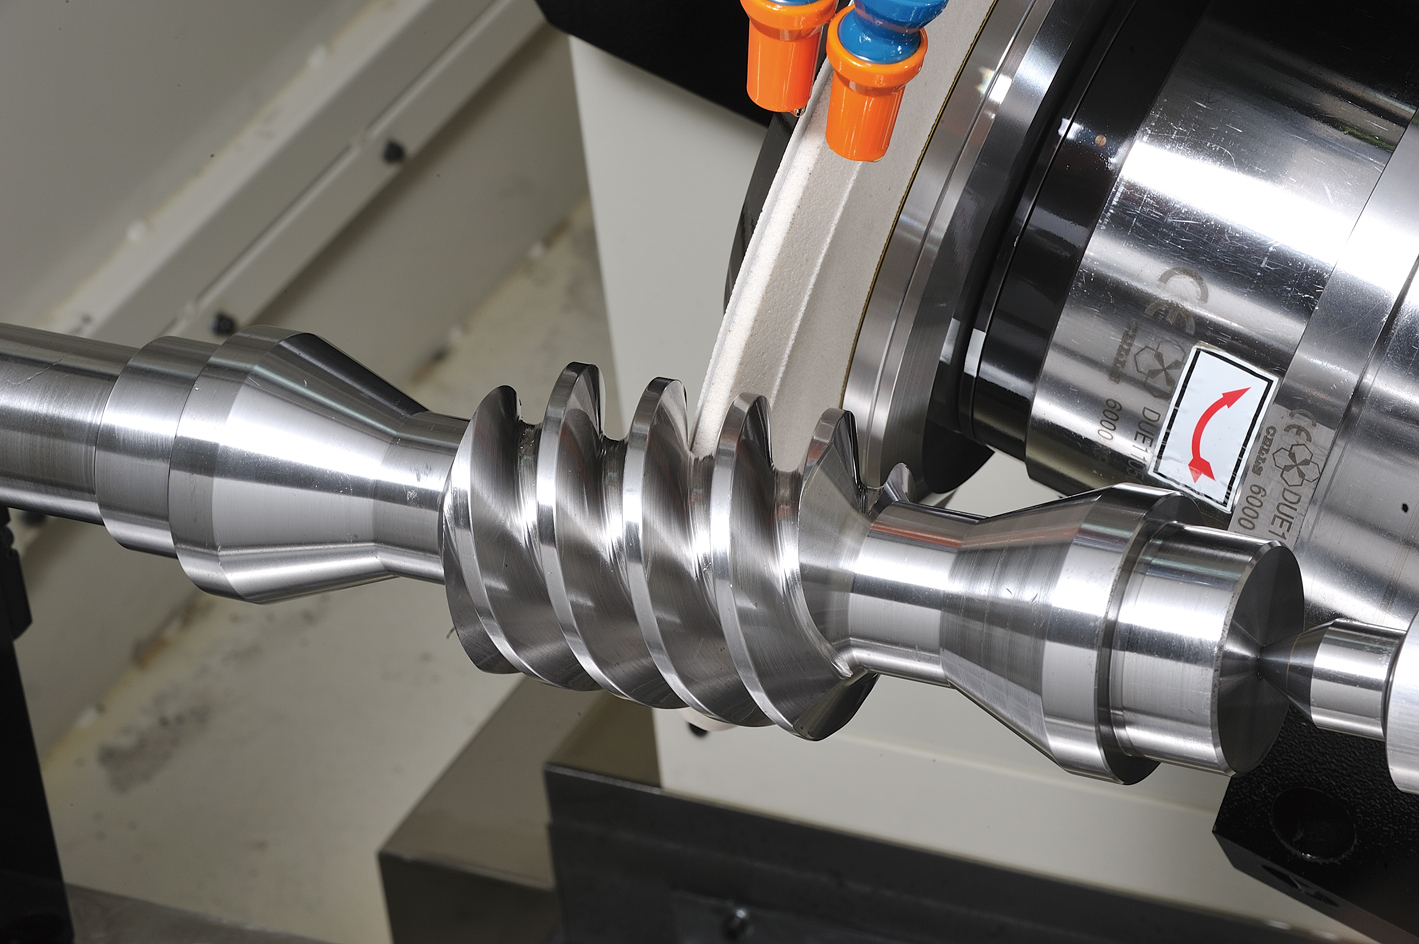 CNC gear grinder manufacturers